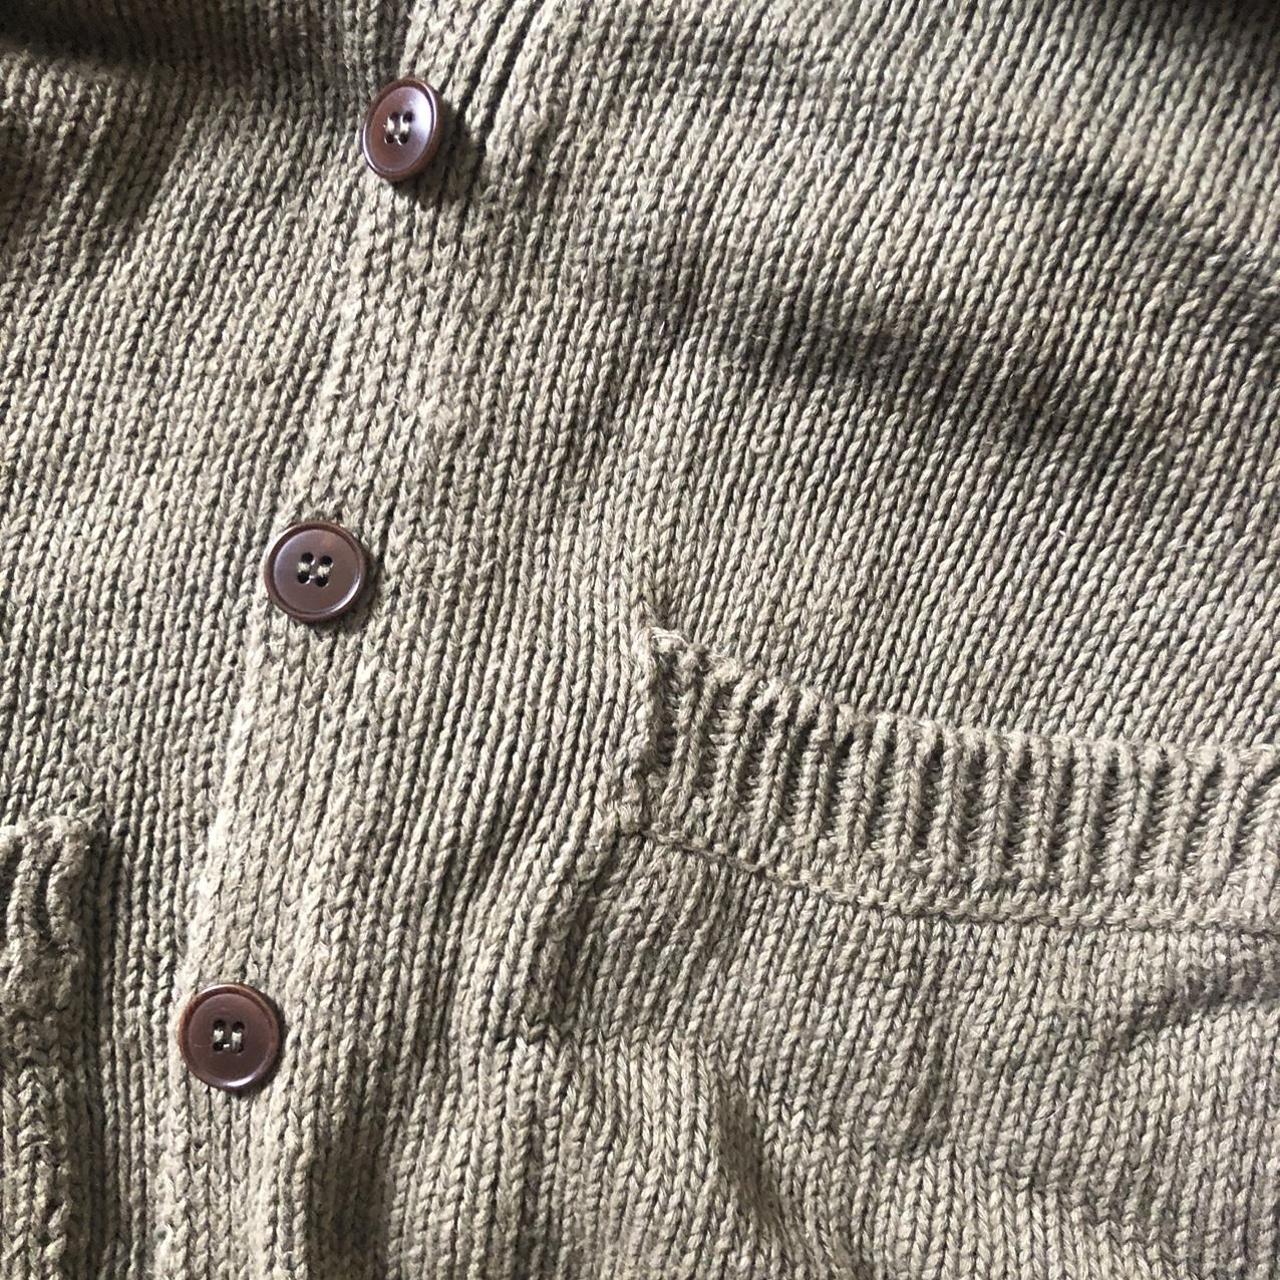 Margaret Howell knit waistcoat vest Khaki linen... - Depop